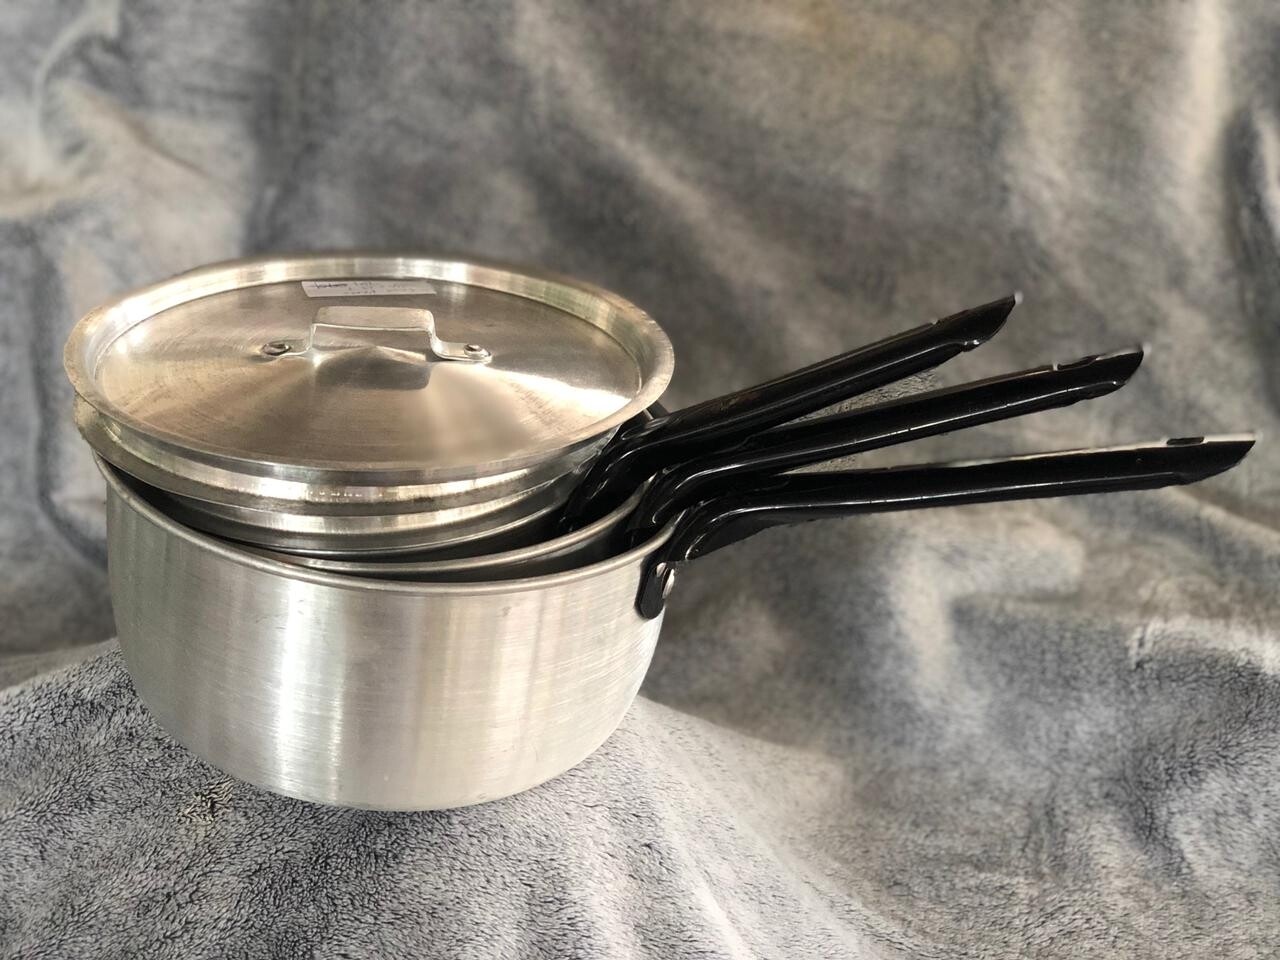 CHUI aluminium sauce pan 3pcs set 22cm 24cm 26cm with lids